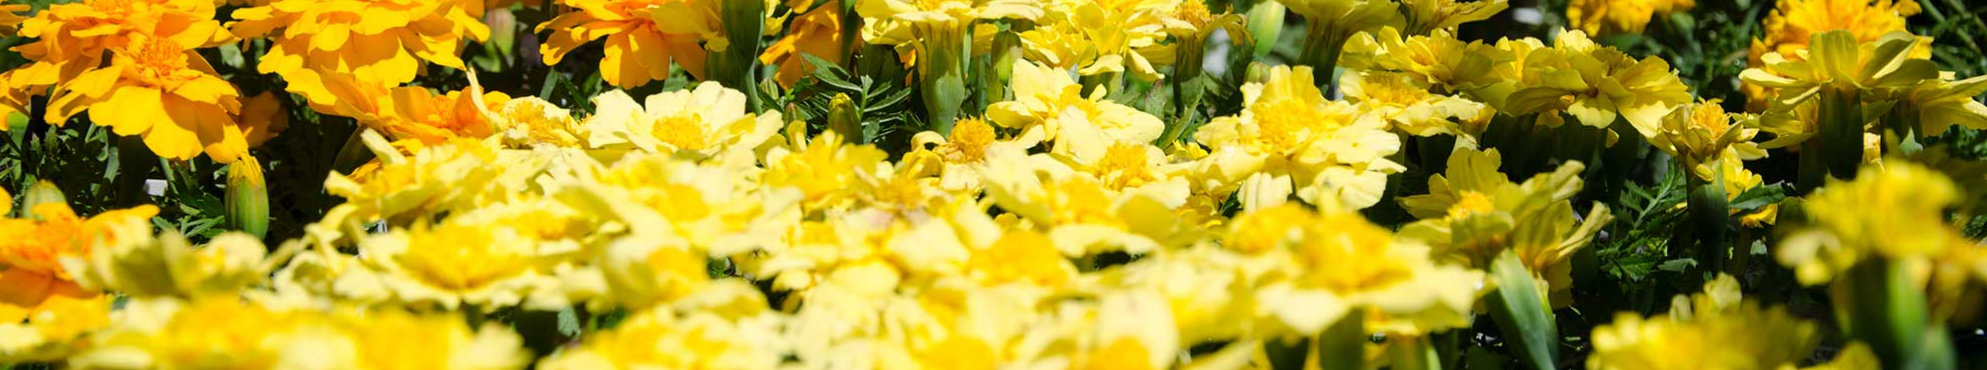 marigolds - Seasonal & Sales - Hillside Nursery Garden Center